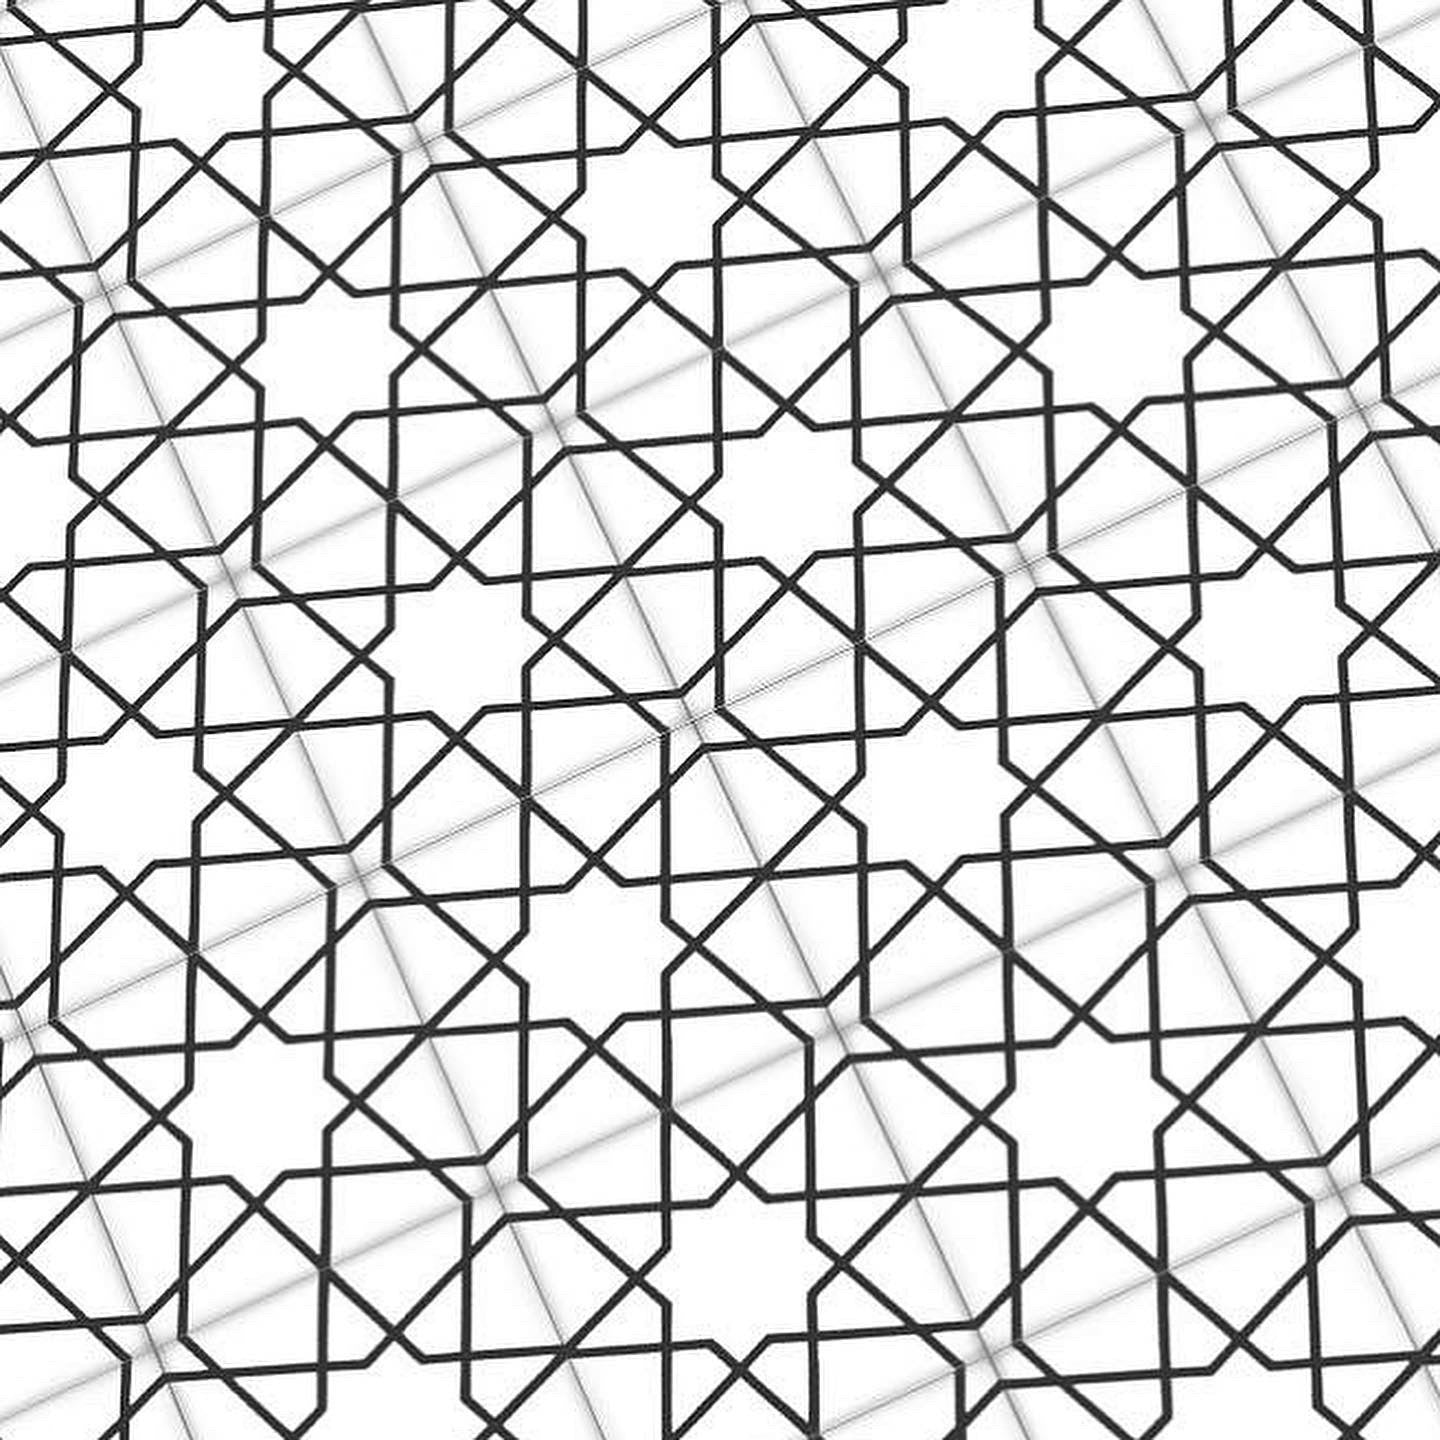 Black and White Geometric Paper Tile